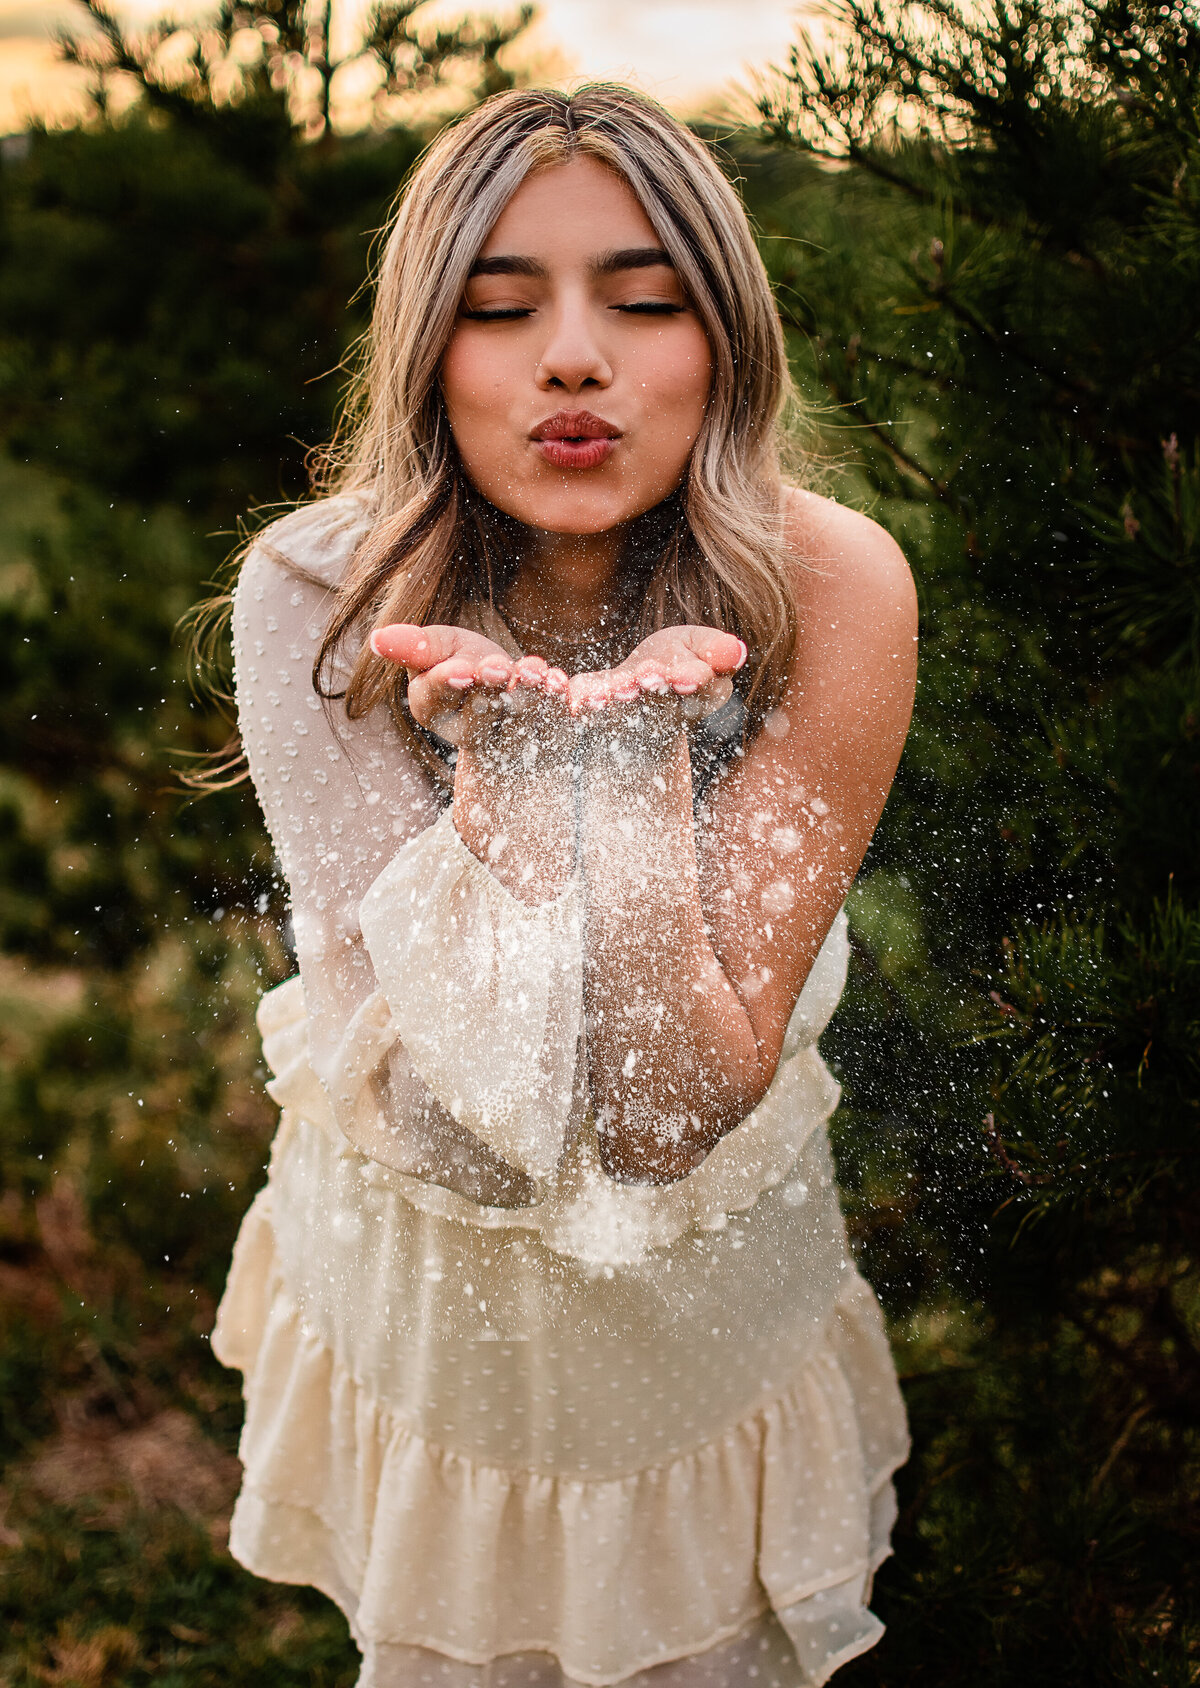 A senior wearing a white dress blows snowflakes at the camera at a tree farm.